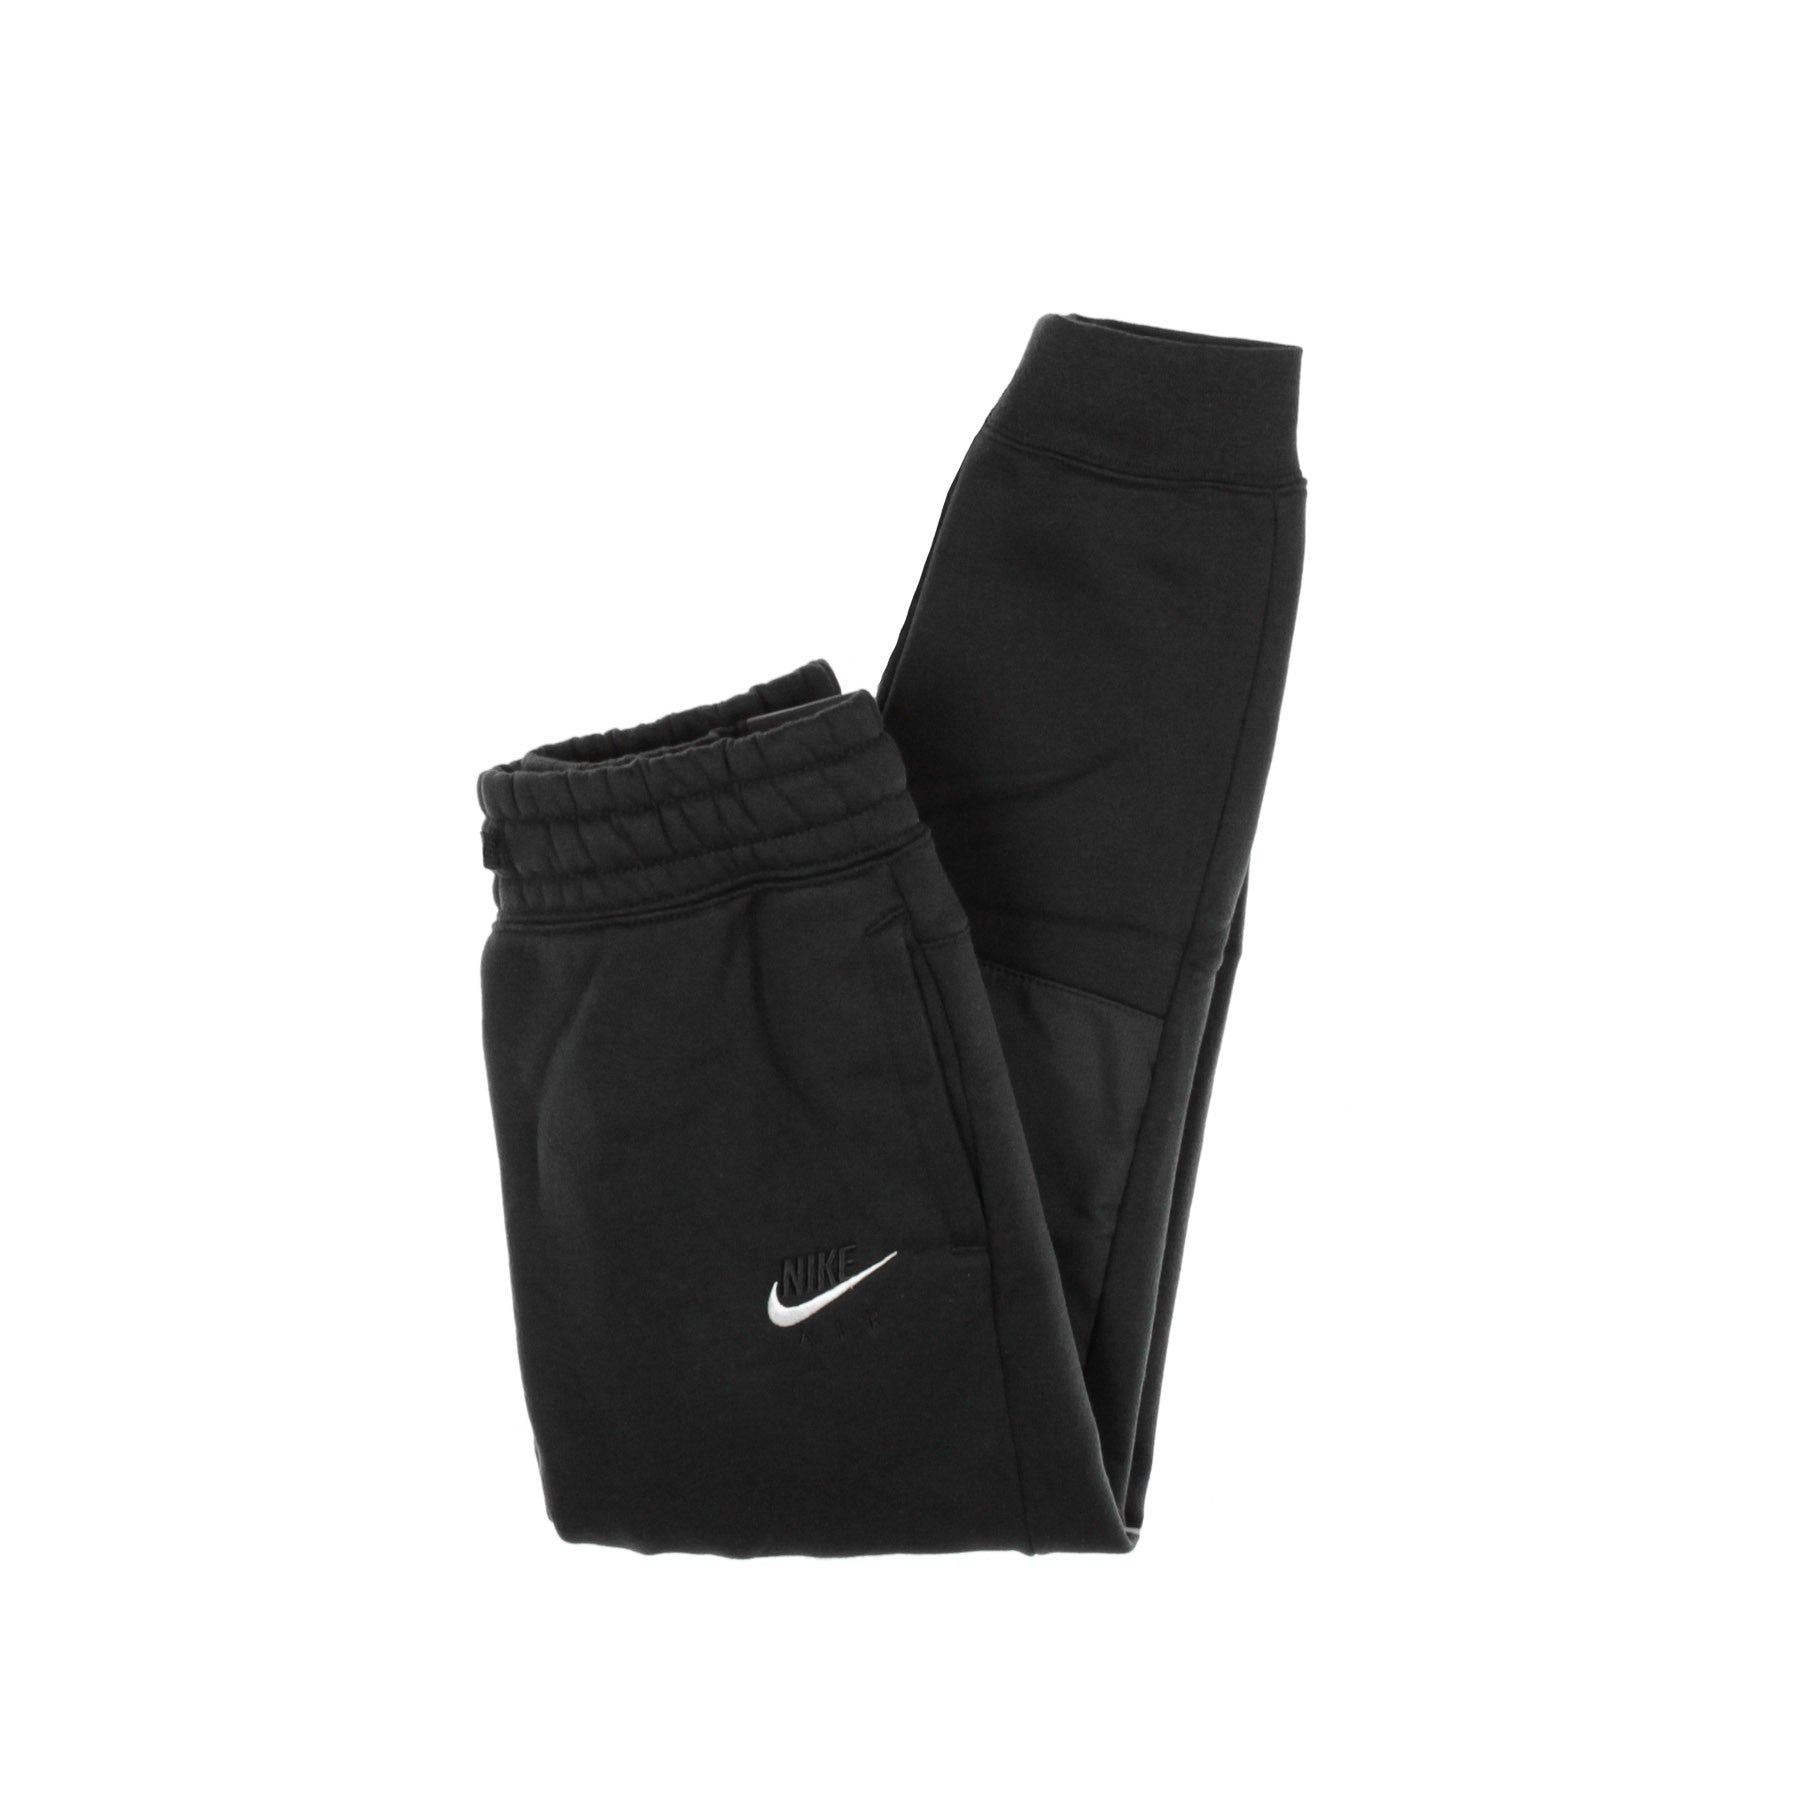 Nike, Pantalone Tuta Felpato Ragazzo Air Pant, Black/black/black/white